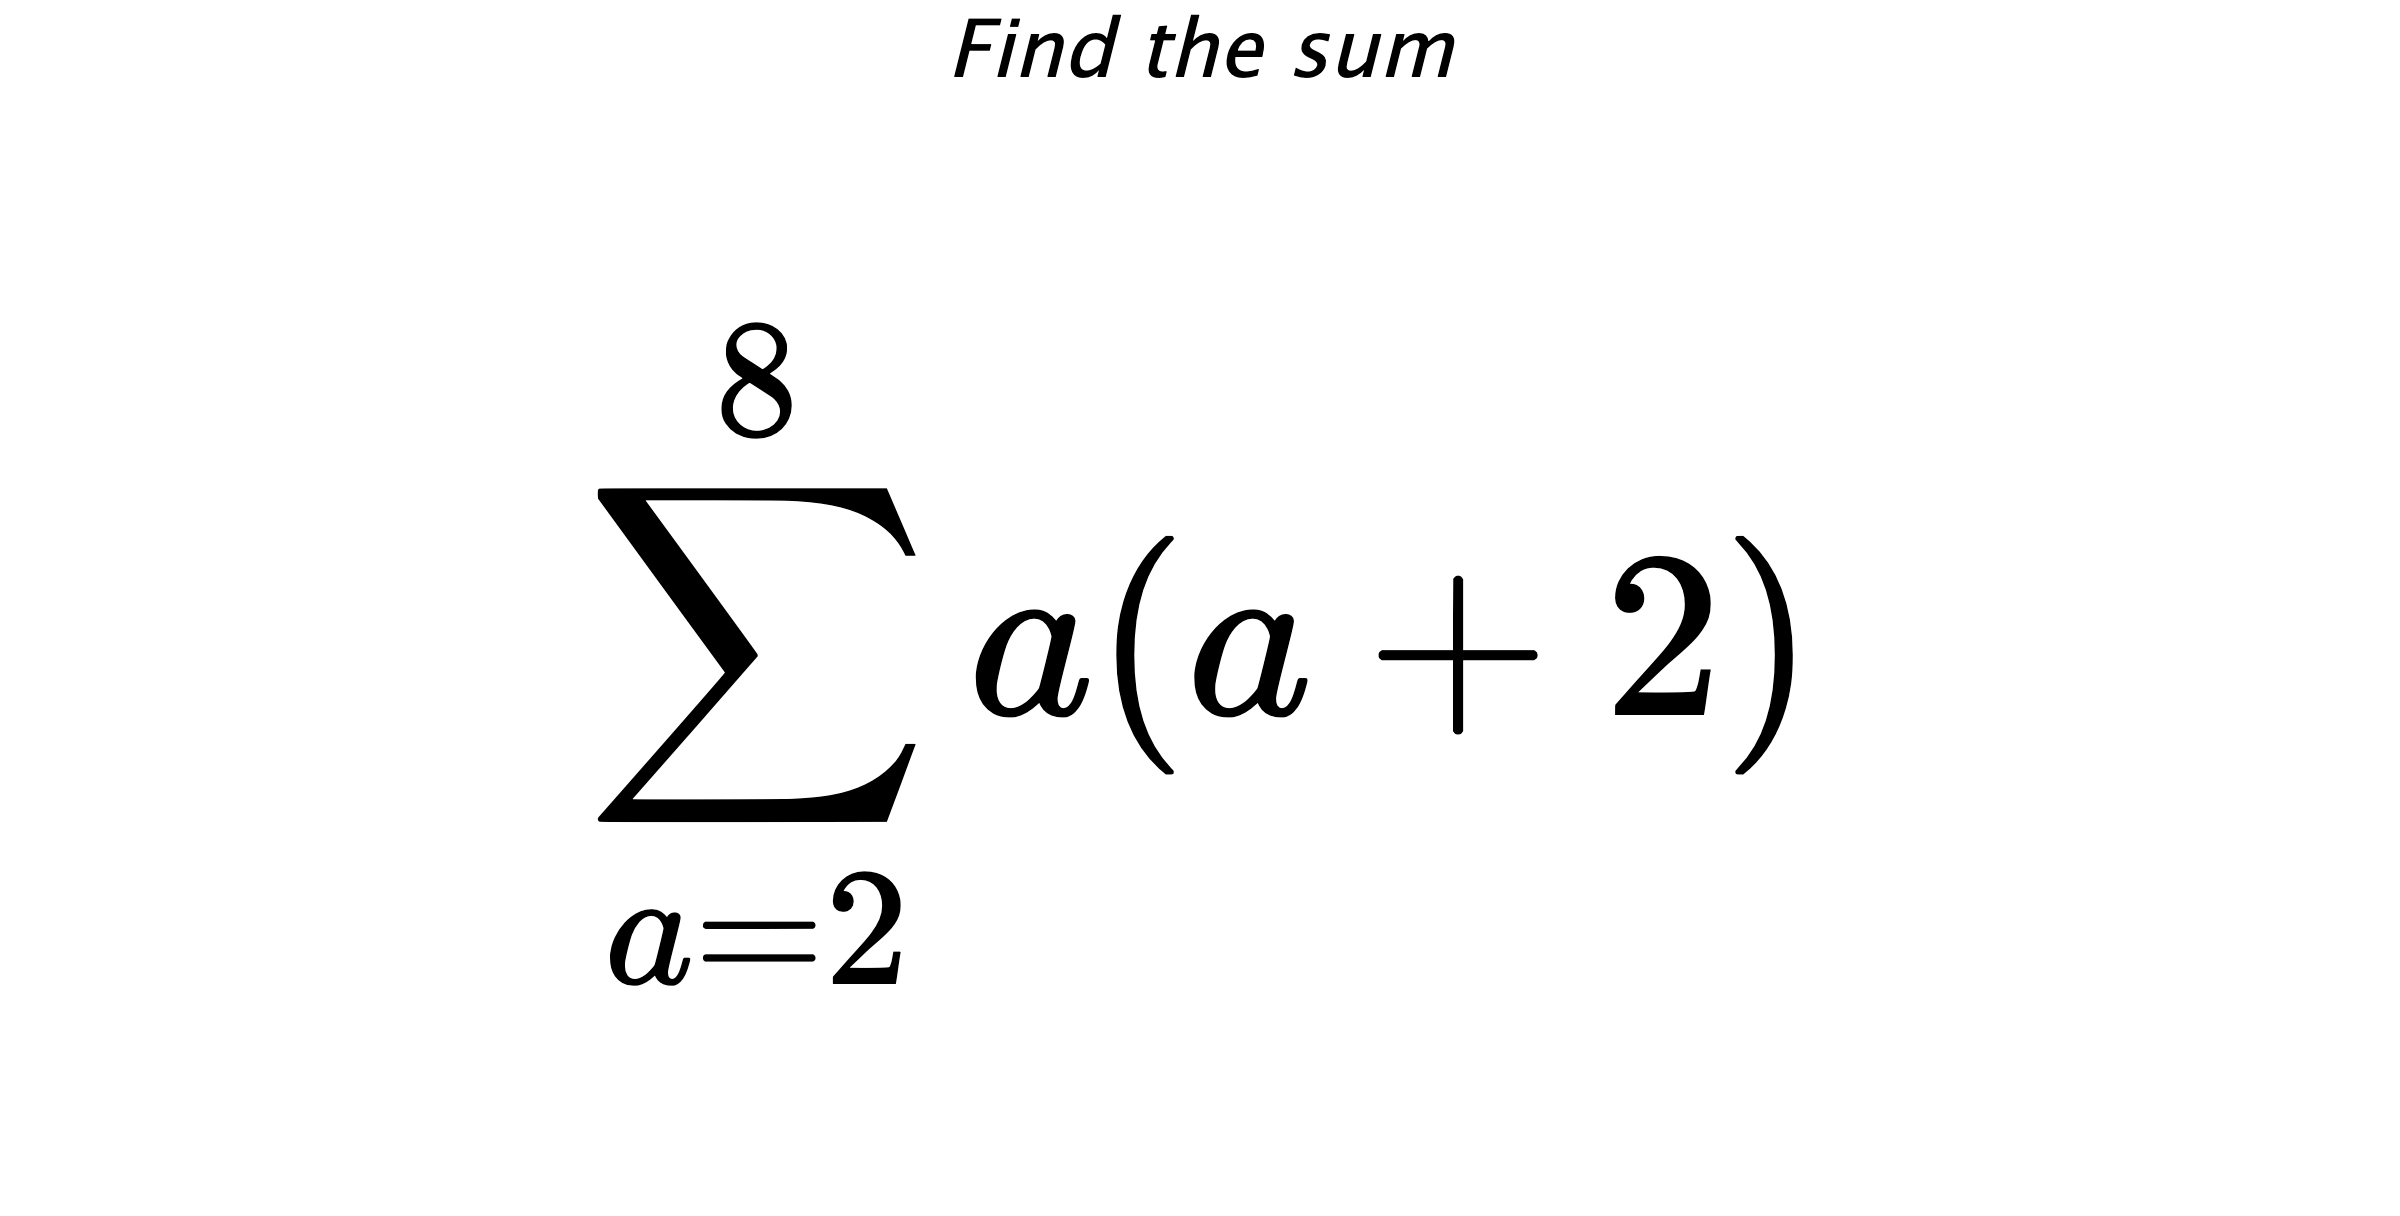 Find the sum $$ \sum_{a=2}^{8} a(a+2)$$